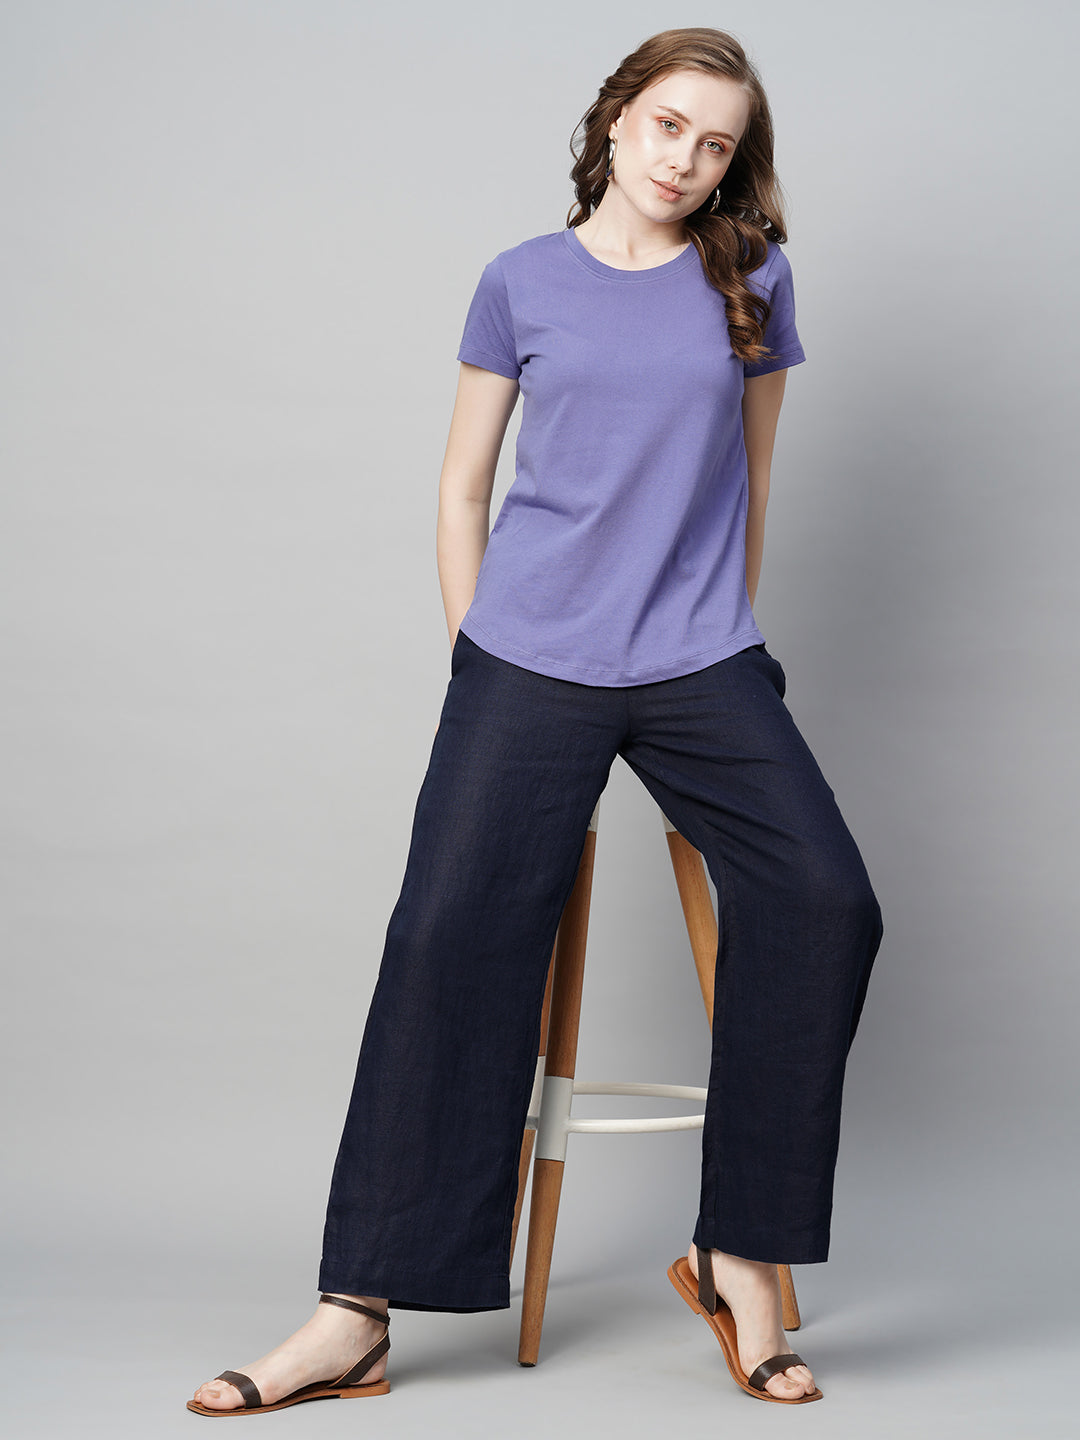 Women's Violet Cotton Regular Fit Tshirt